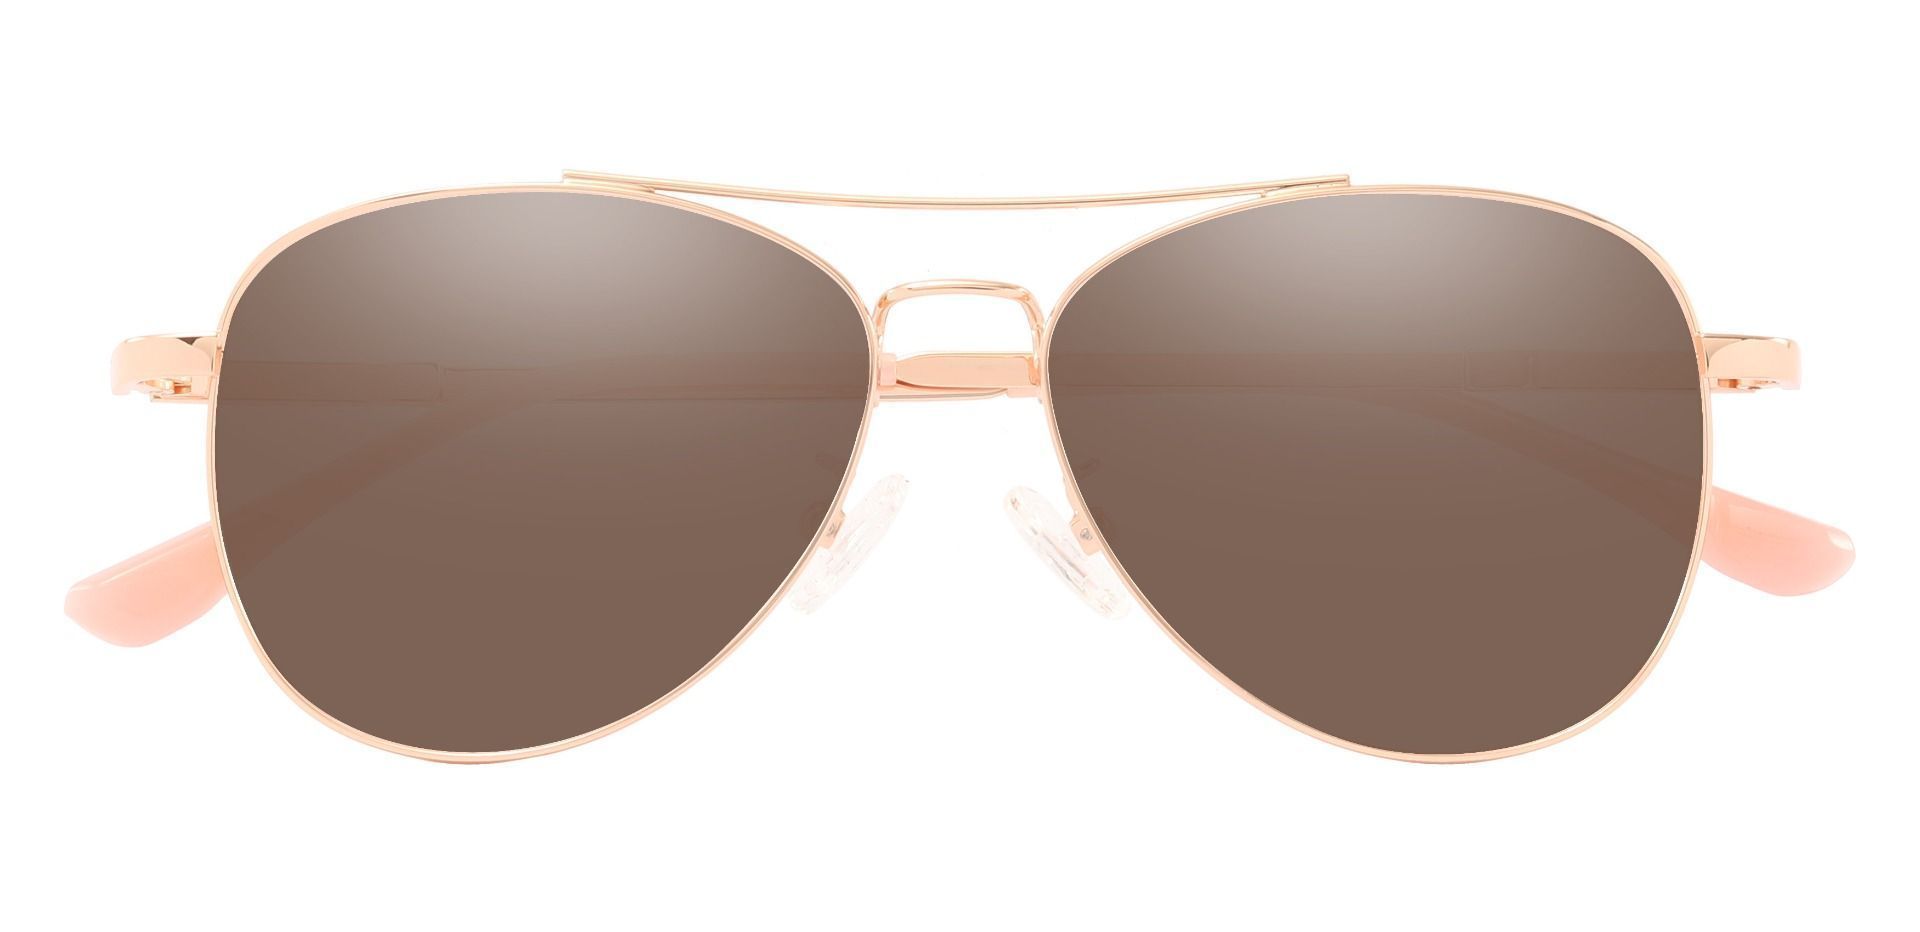 Sterling Aviator Prescription Sunglasses - Rose Gold Frame With Brown Lenses